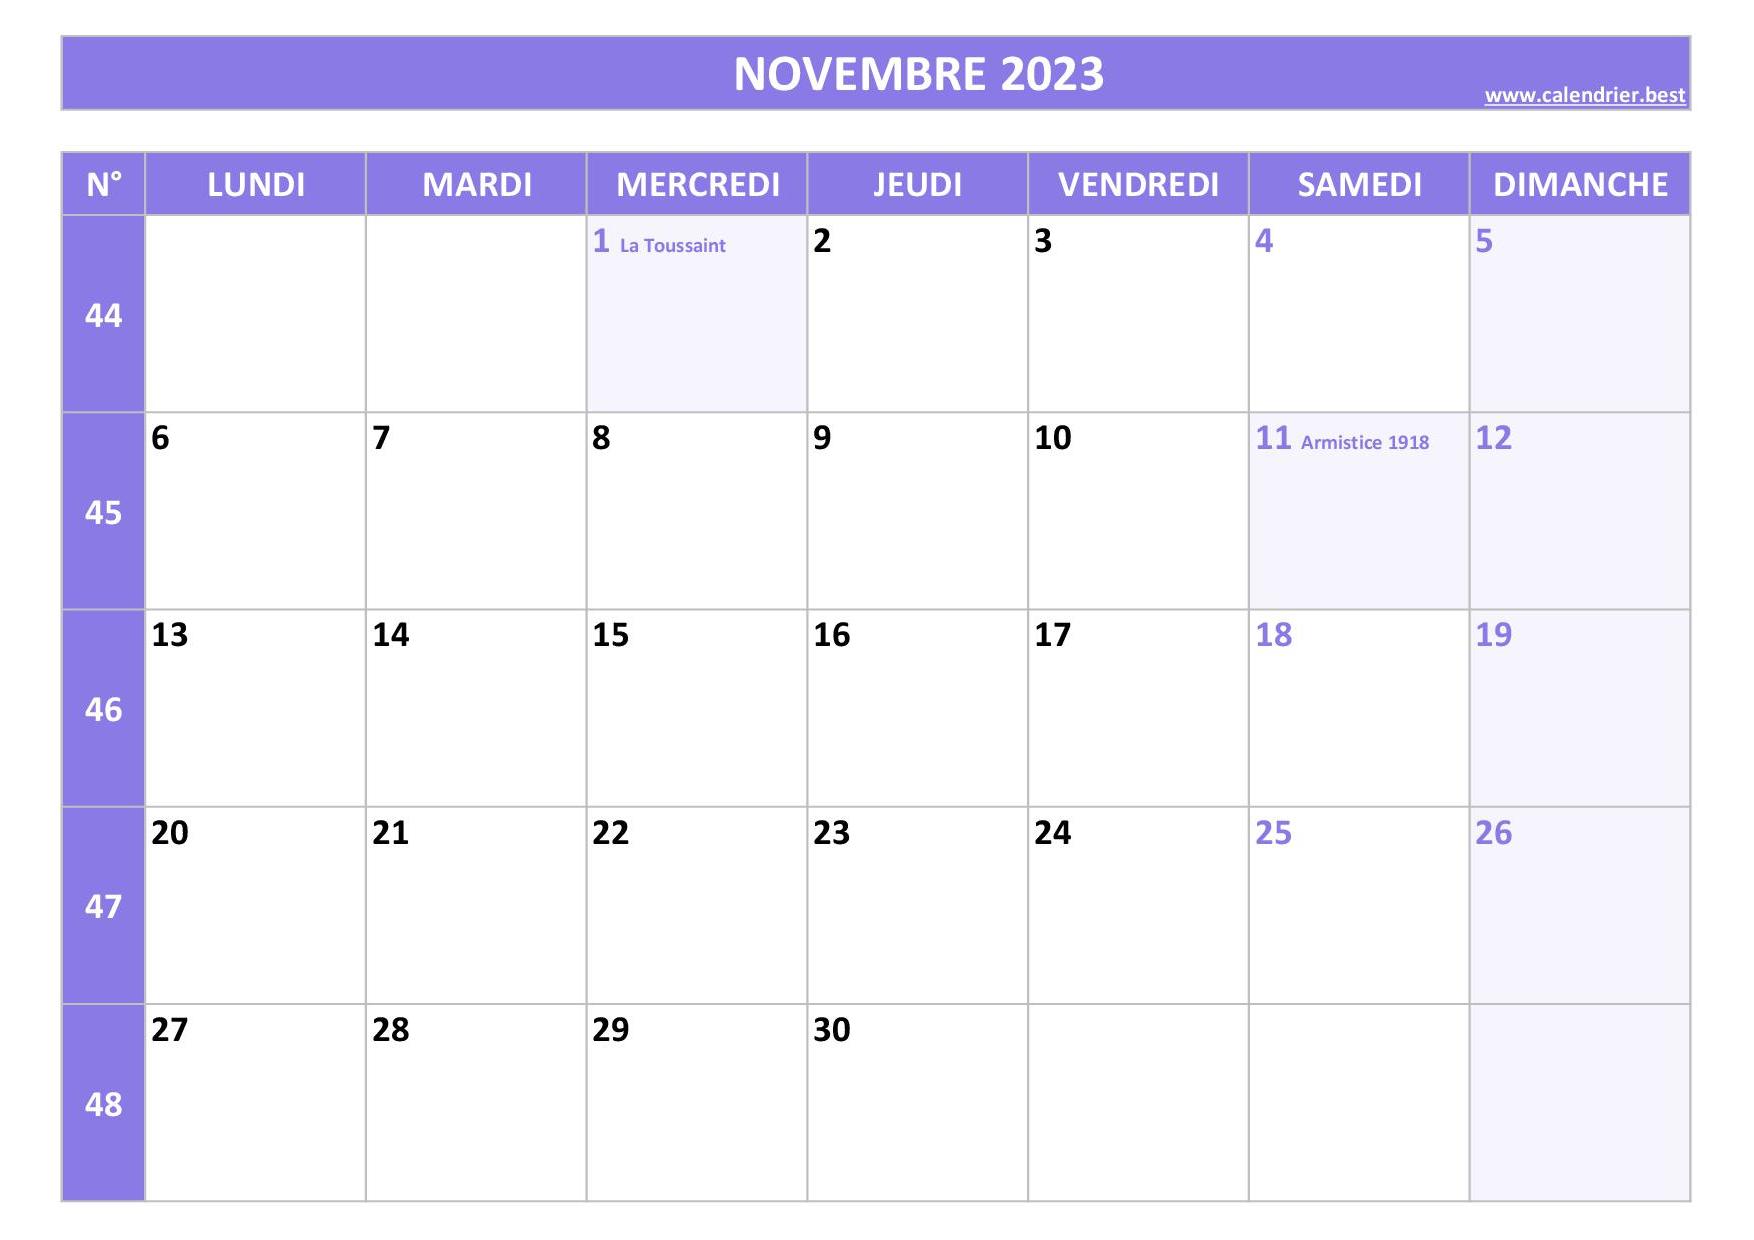 https://www.calendrier.best/images/mensuel/2023/novembre/calendrier-novembre-2023-semaine-violet.jpg